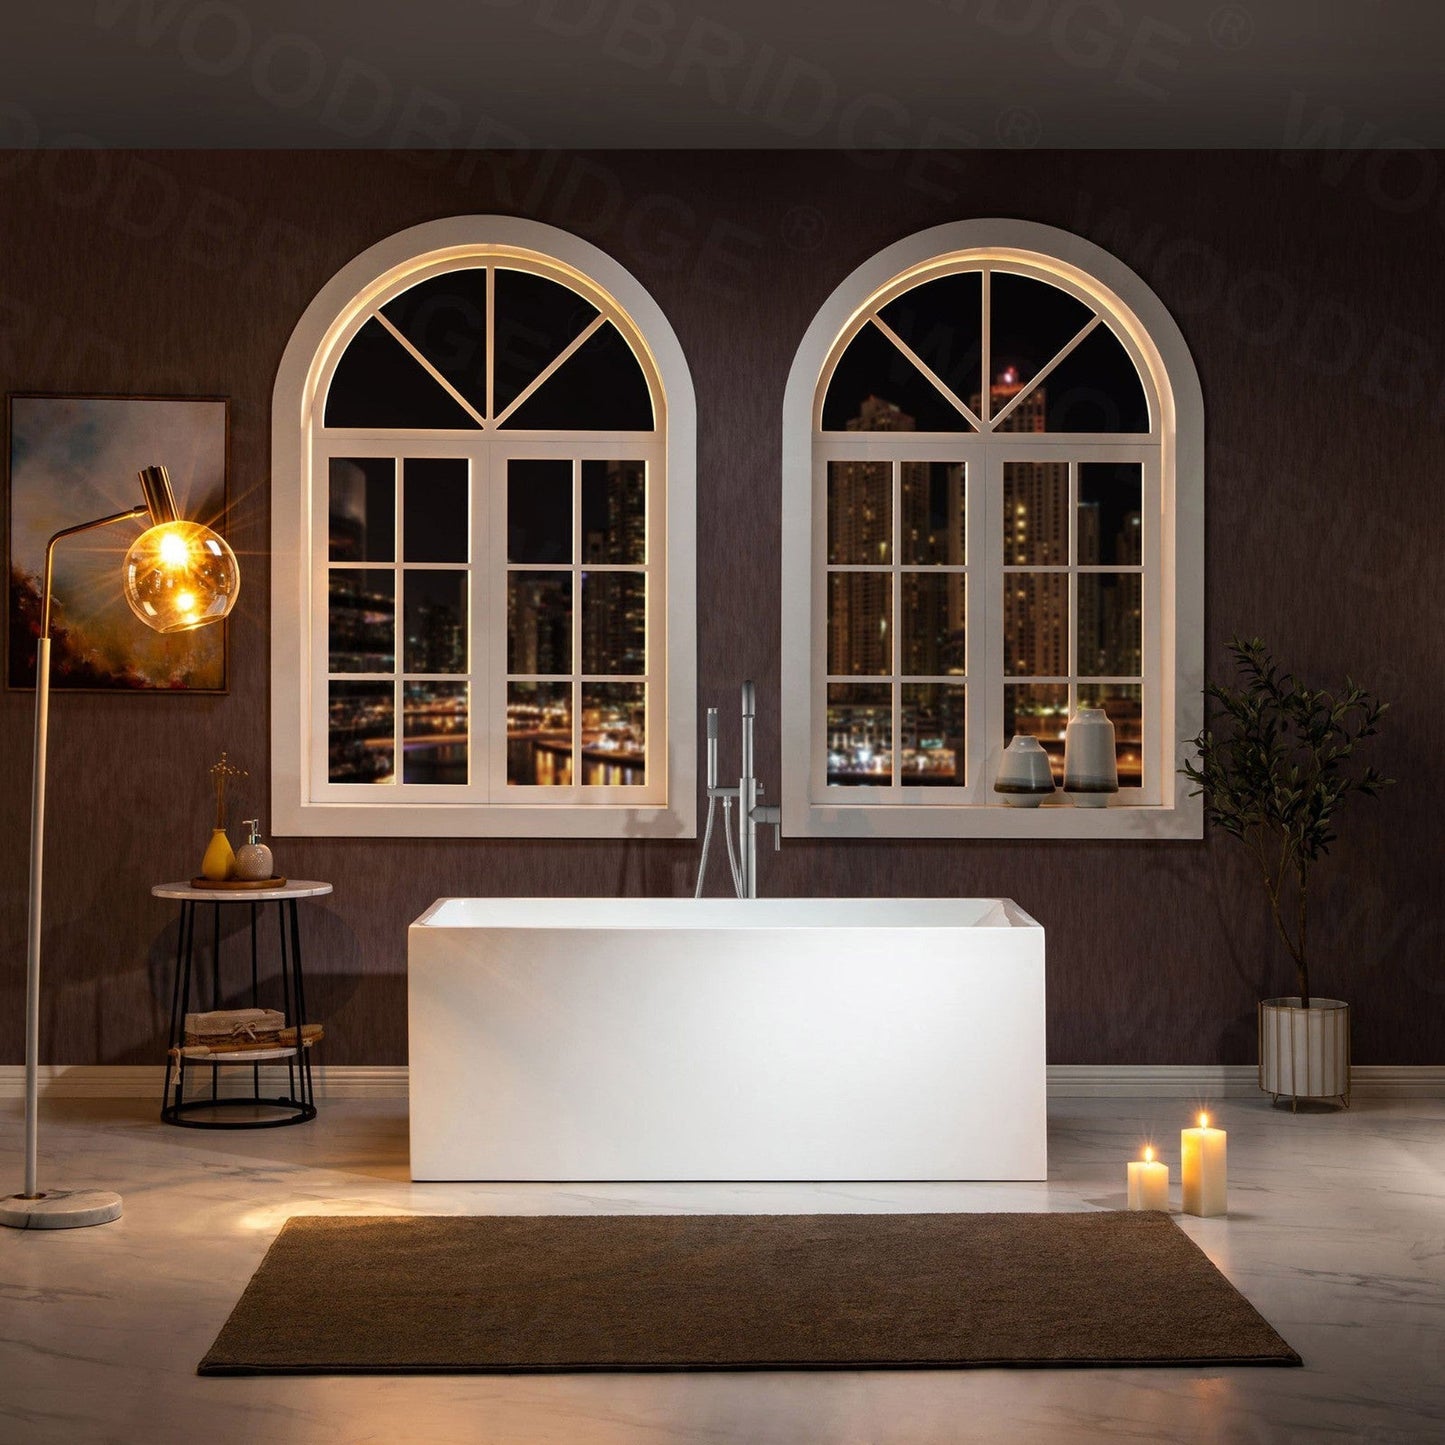 WoodBridge B-0085 59" White Acrylic Freestanding Soaking Bathtub With Chrome Drain, Overflow, F0071CHVT Tub Filler and Caddy Tray